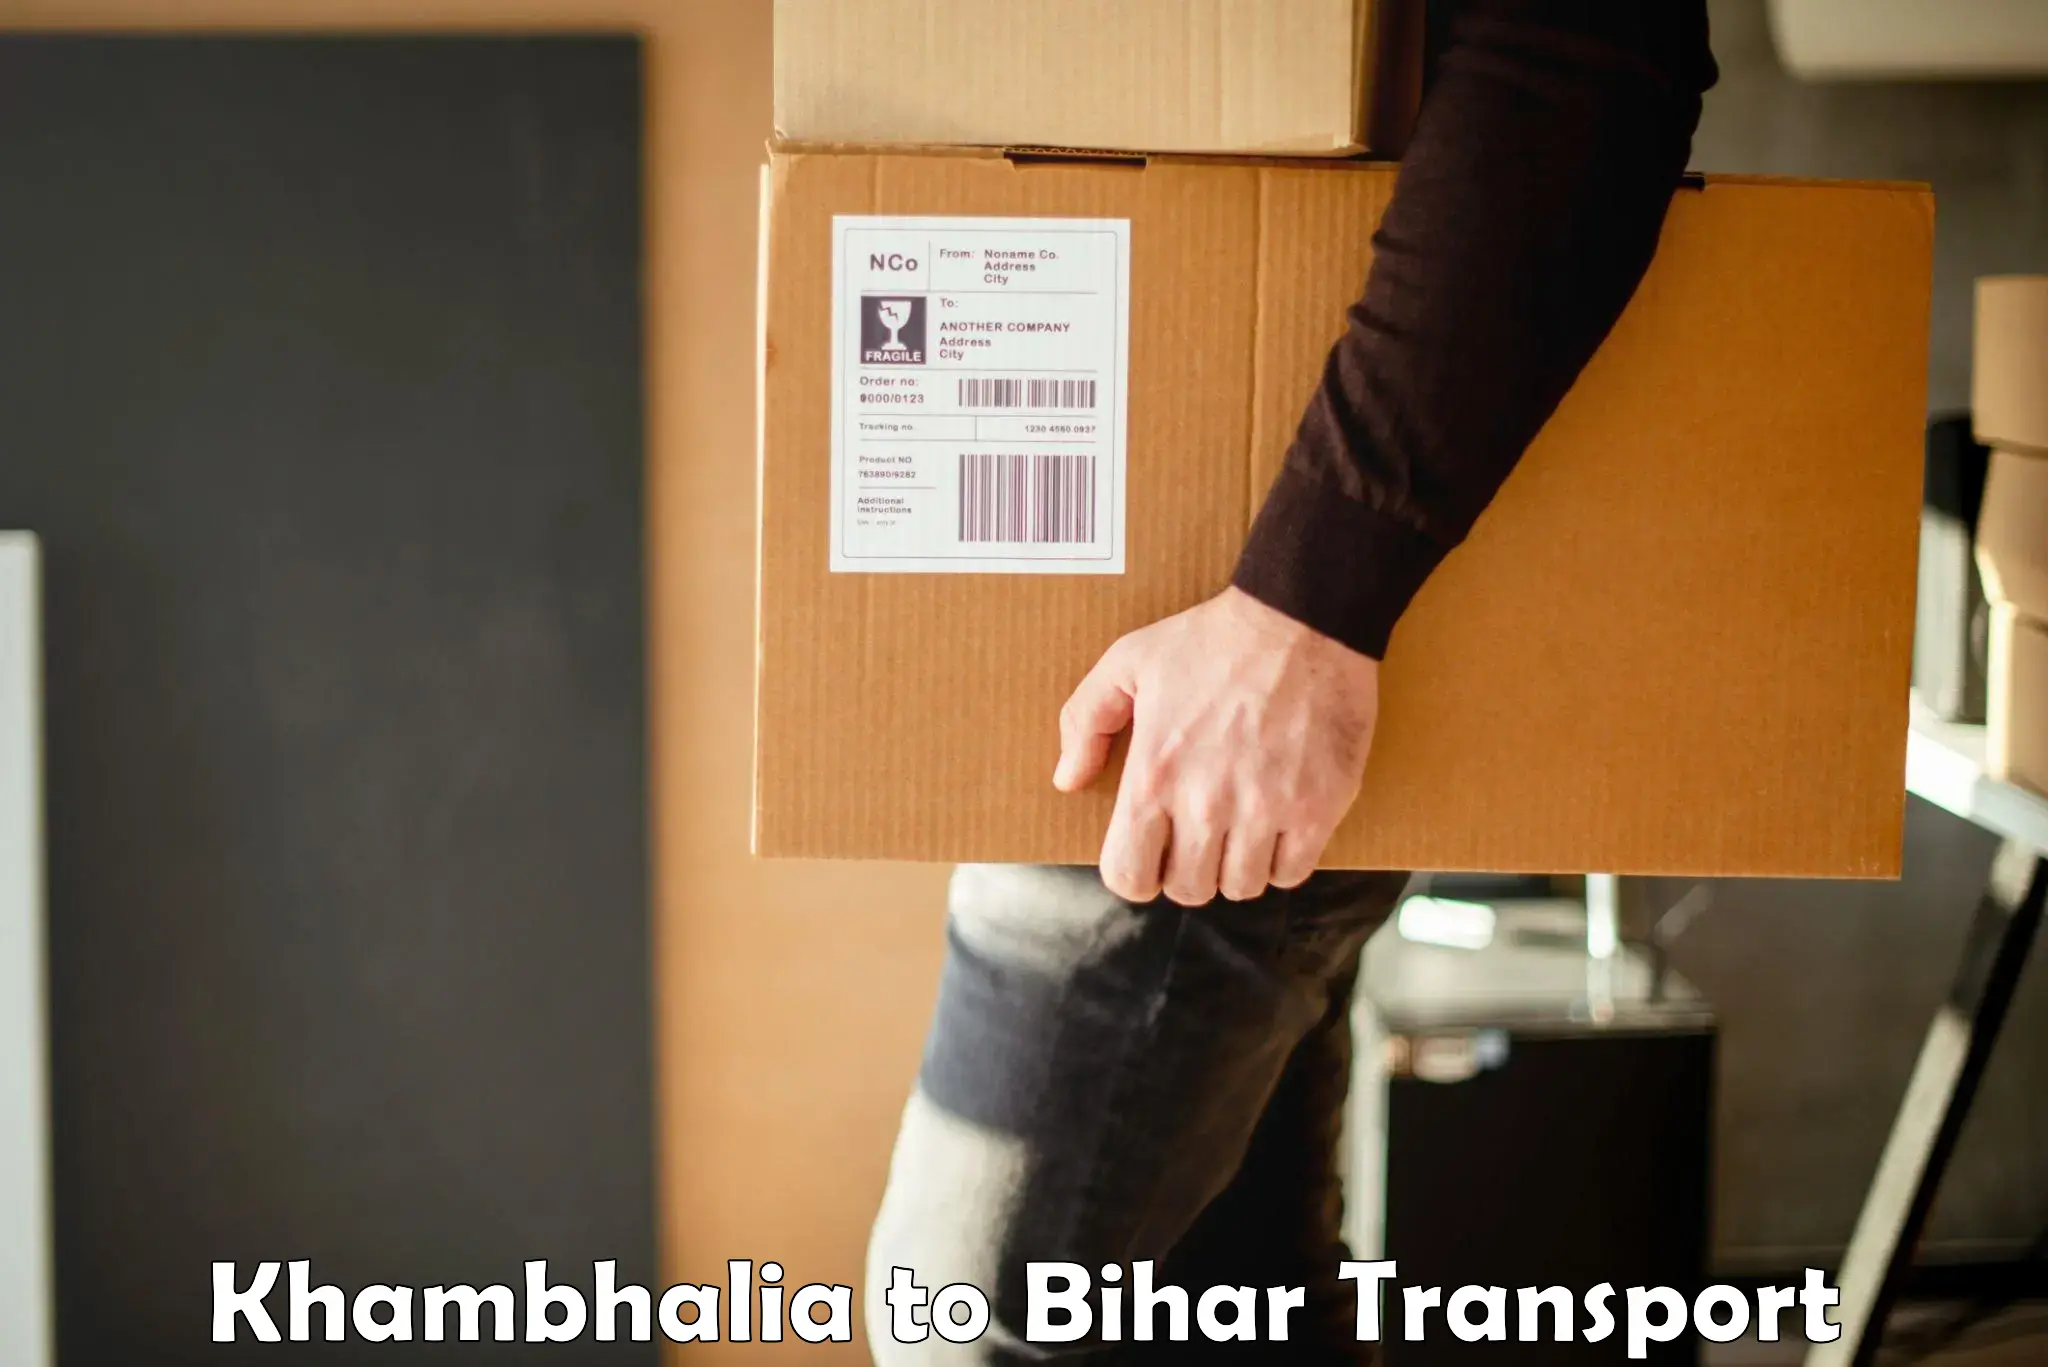 Delivery service Khambhalia to Kochas